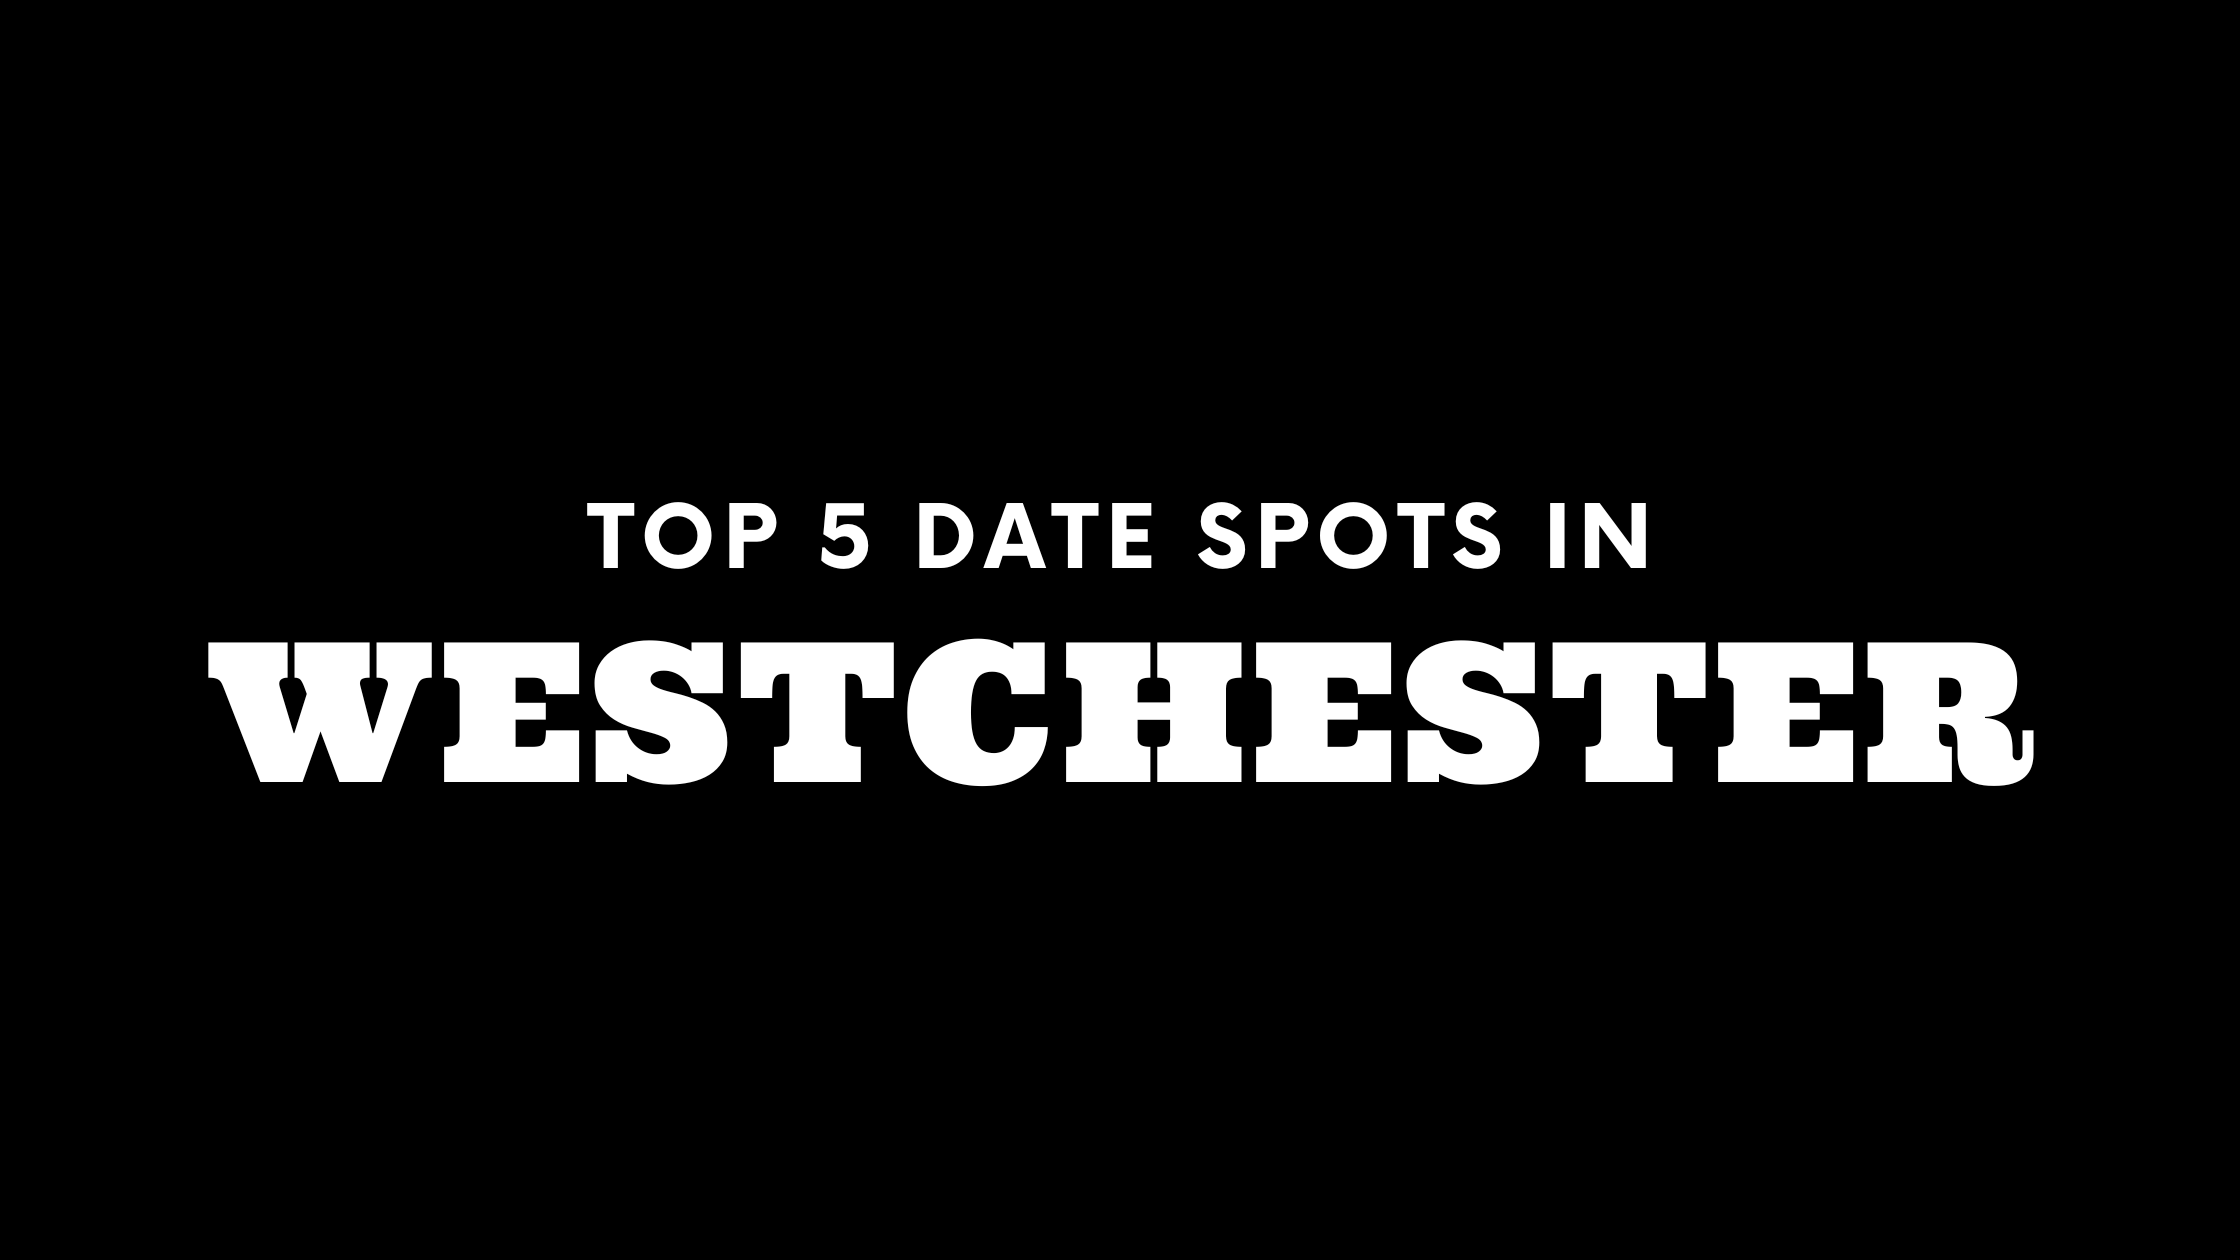 Top 5 Date Spots in Westchester